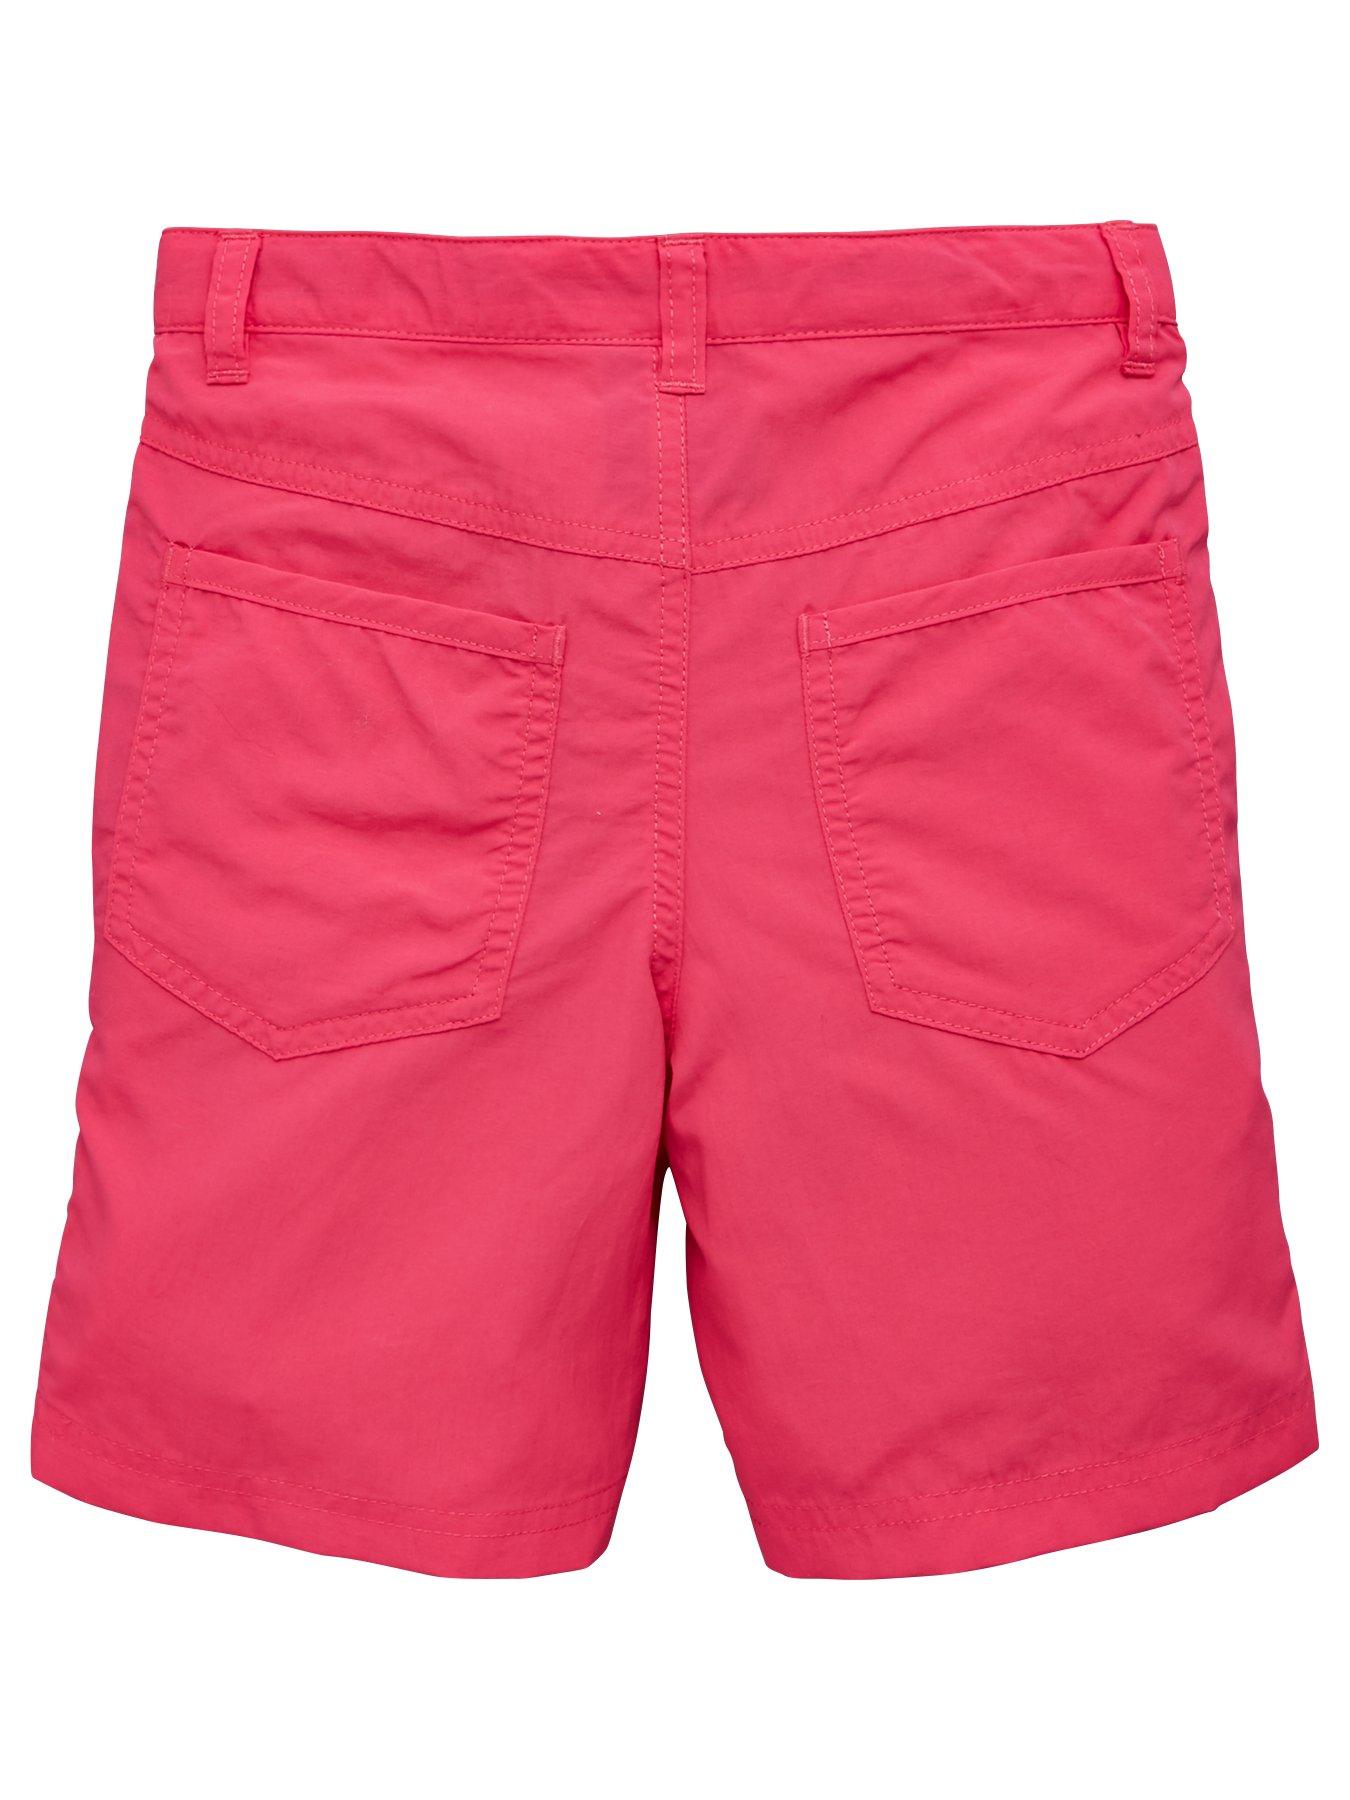 Jack Wolfskin Girls Sun Shorts - Pink | very.co.uk